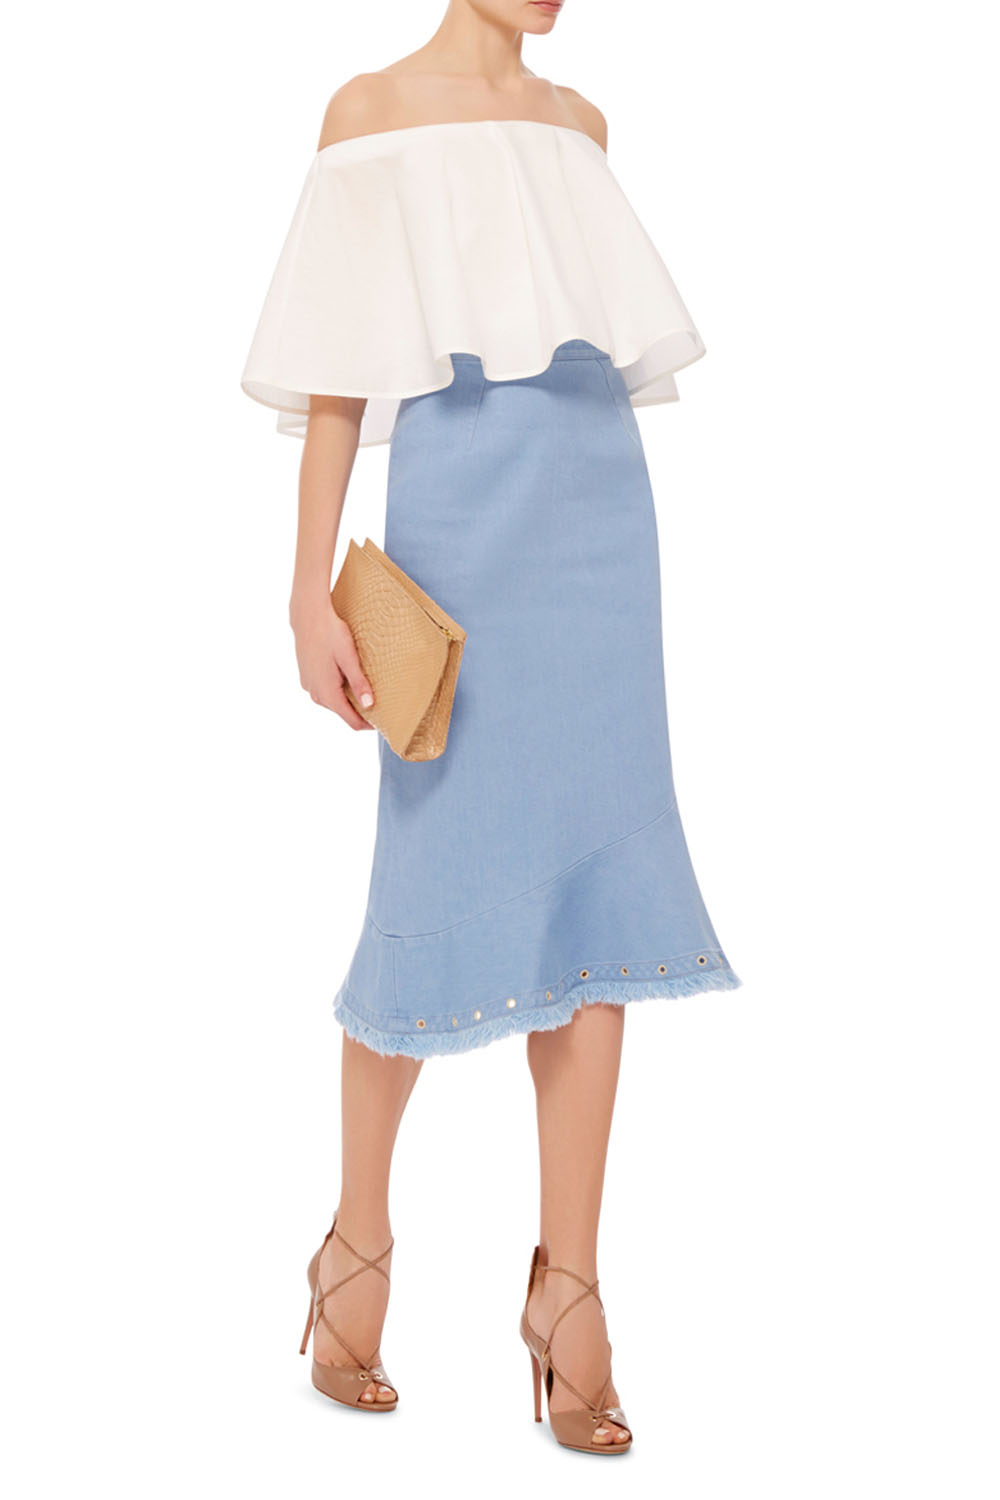 Saloni skirt, approx $365, from Moda Operandi.